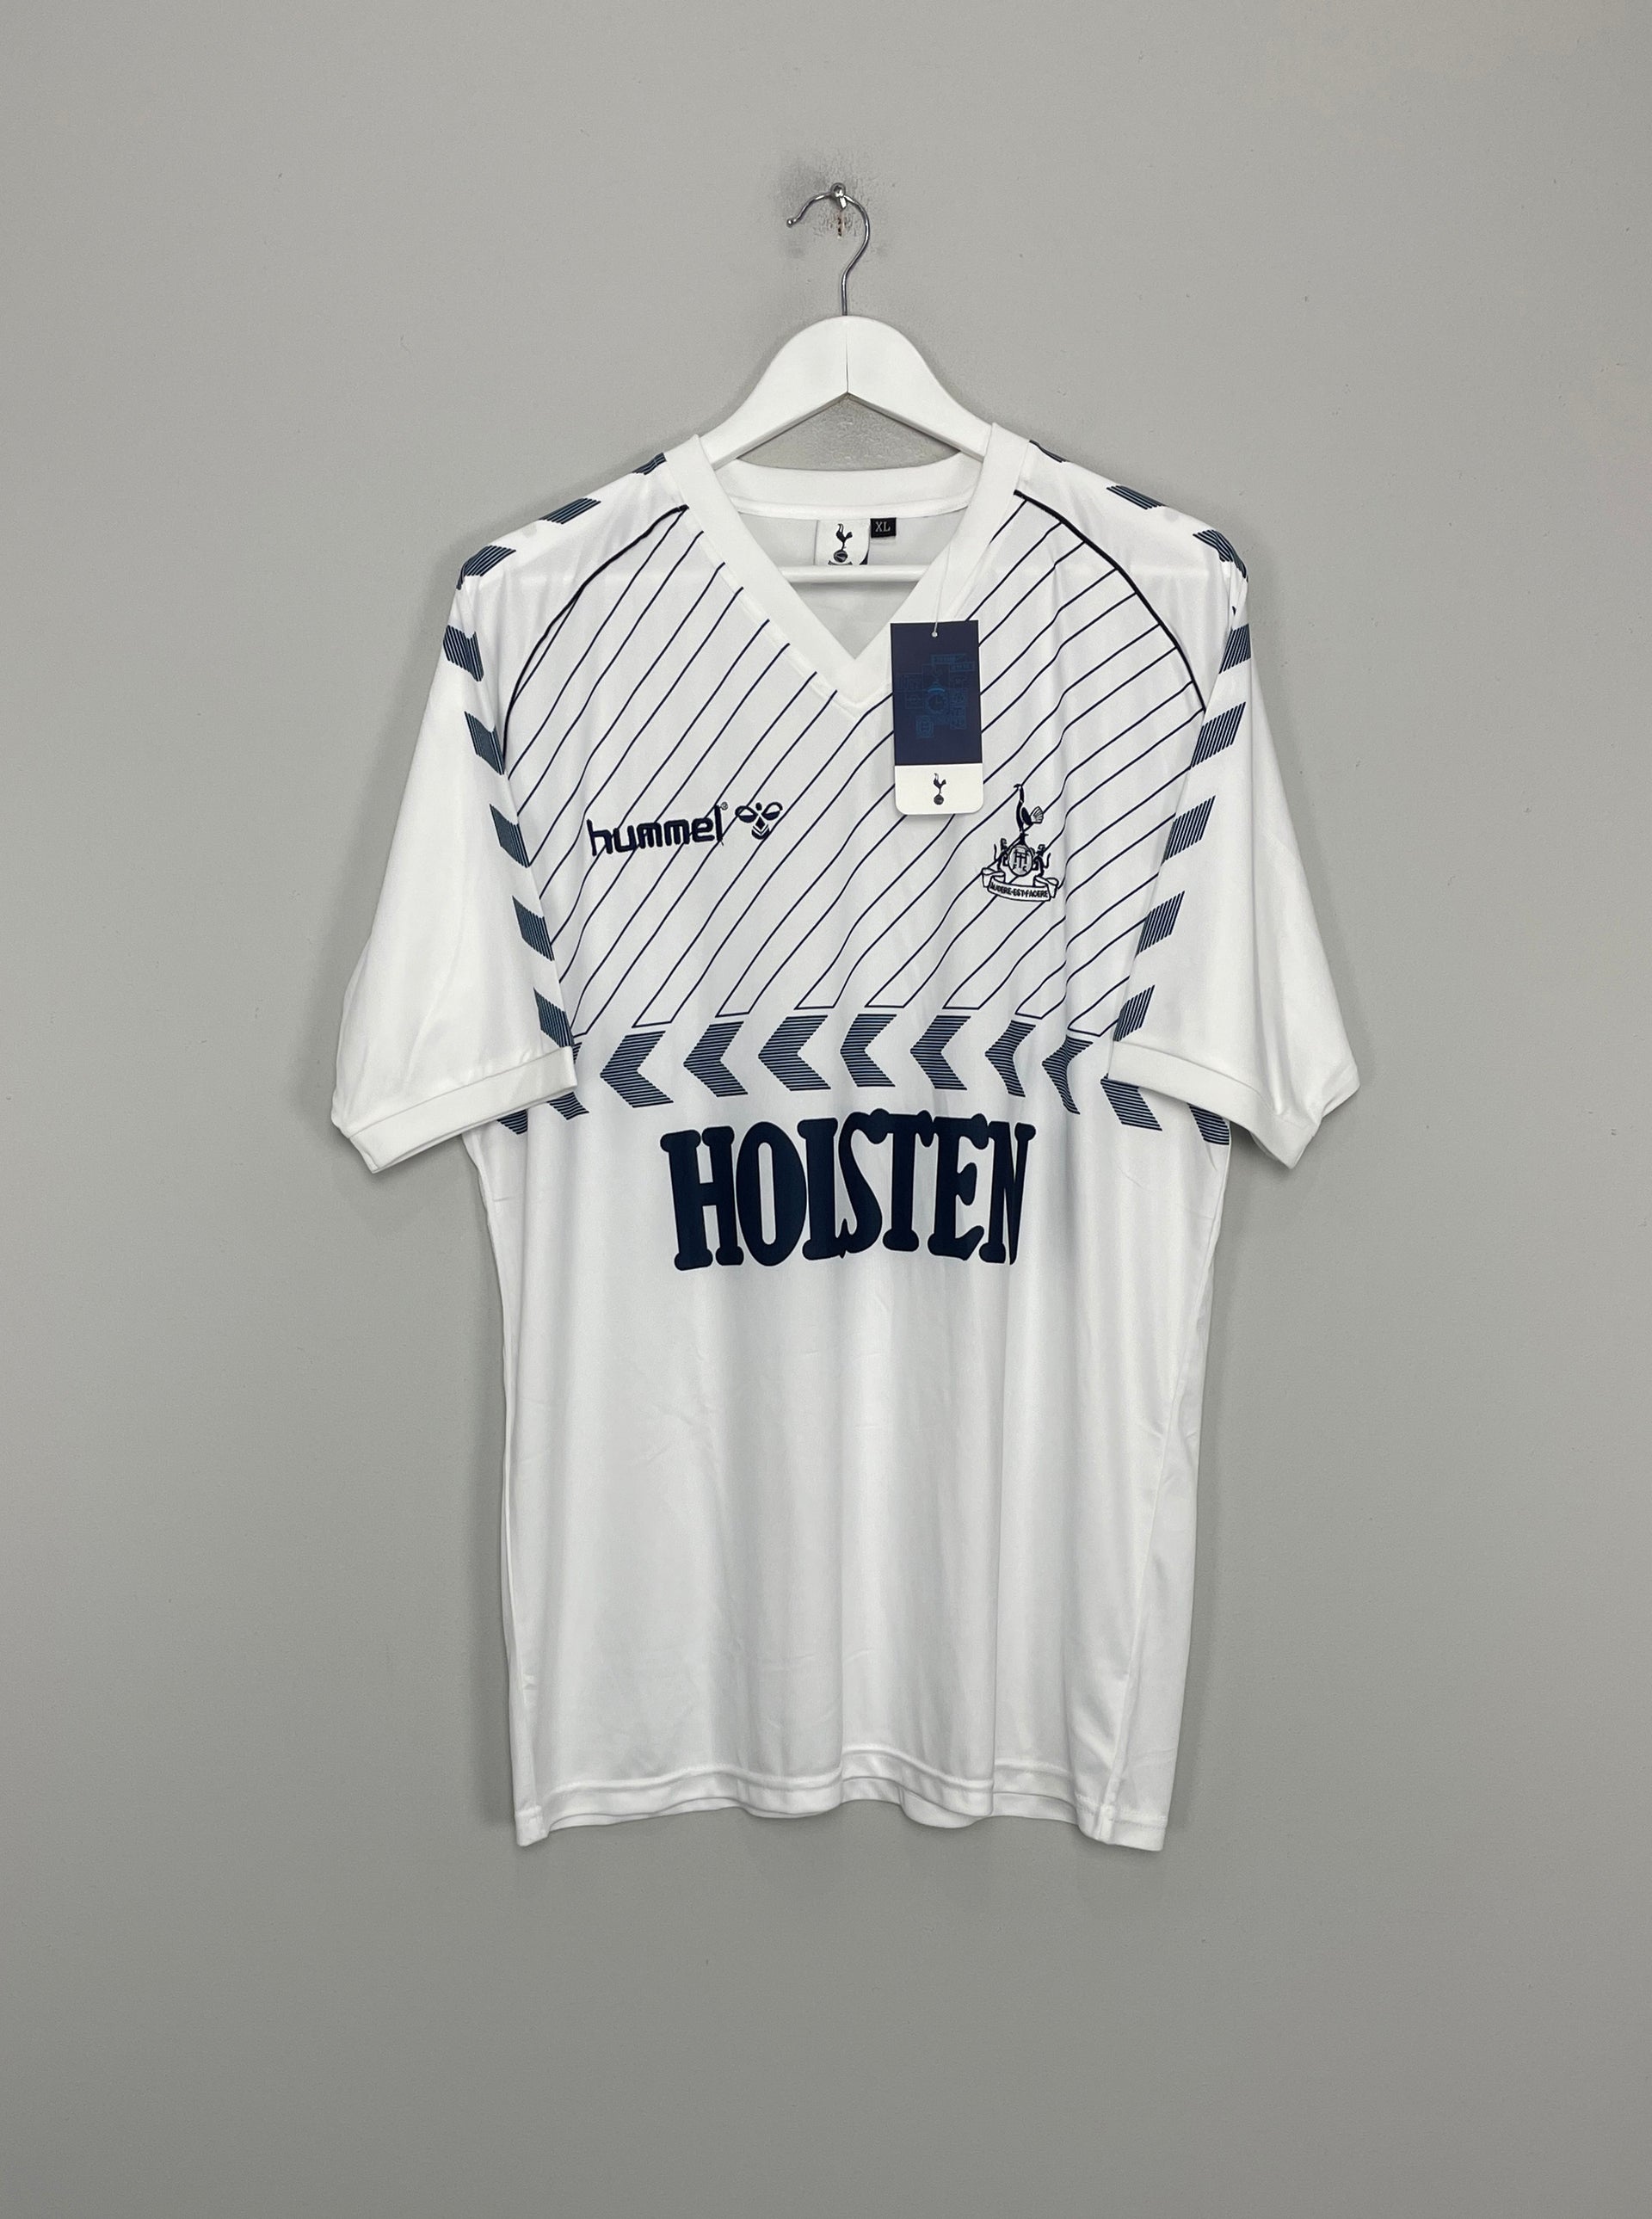 Tottenham Hotspur 1986 retro football shirt